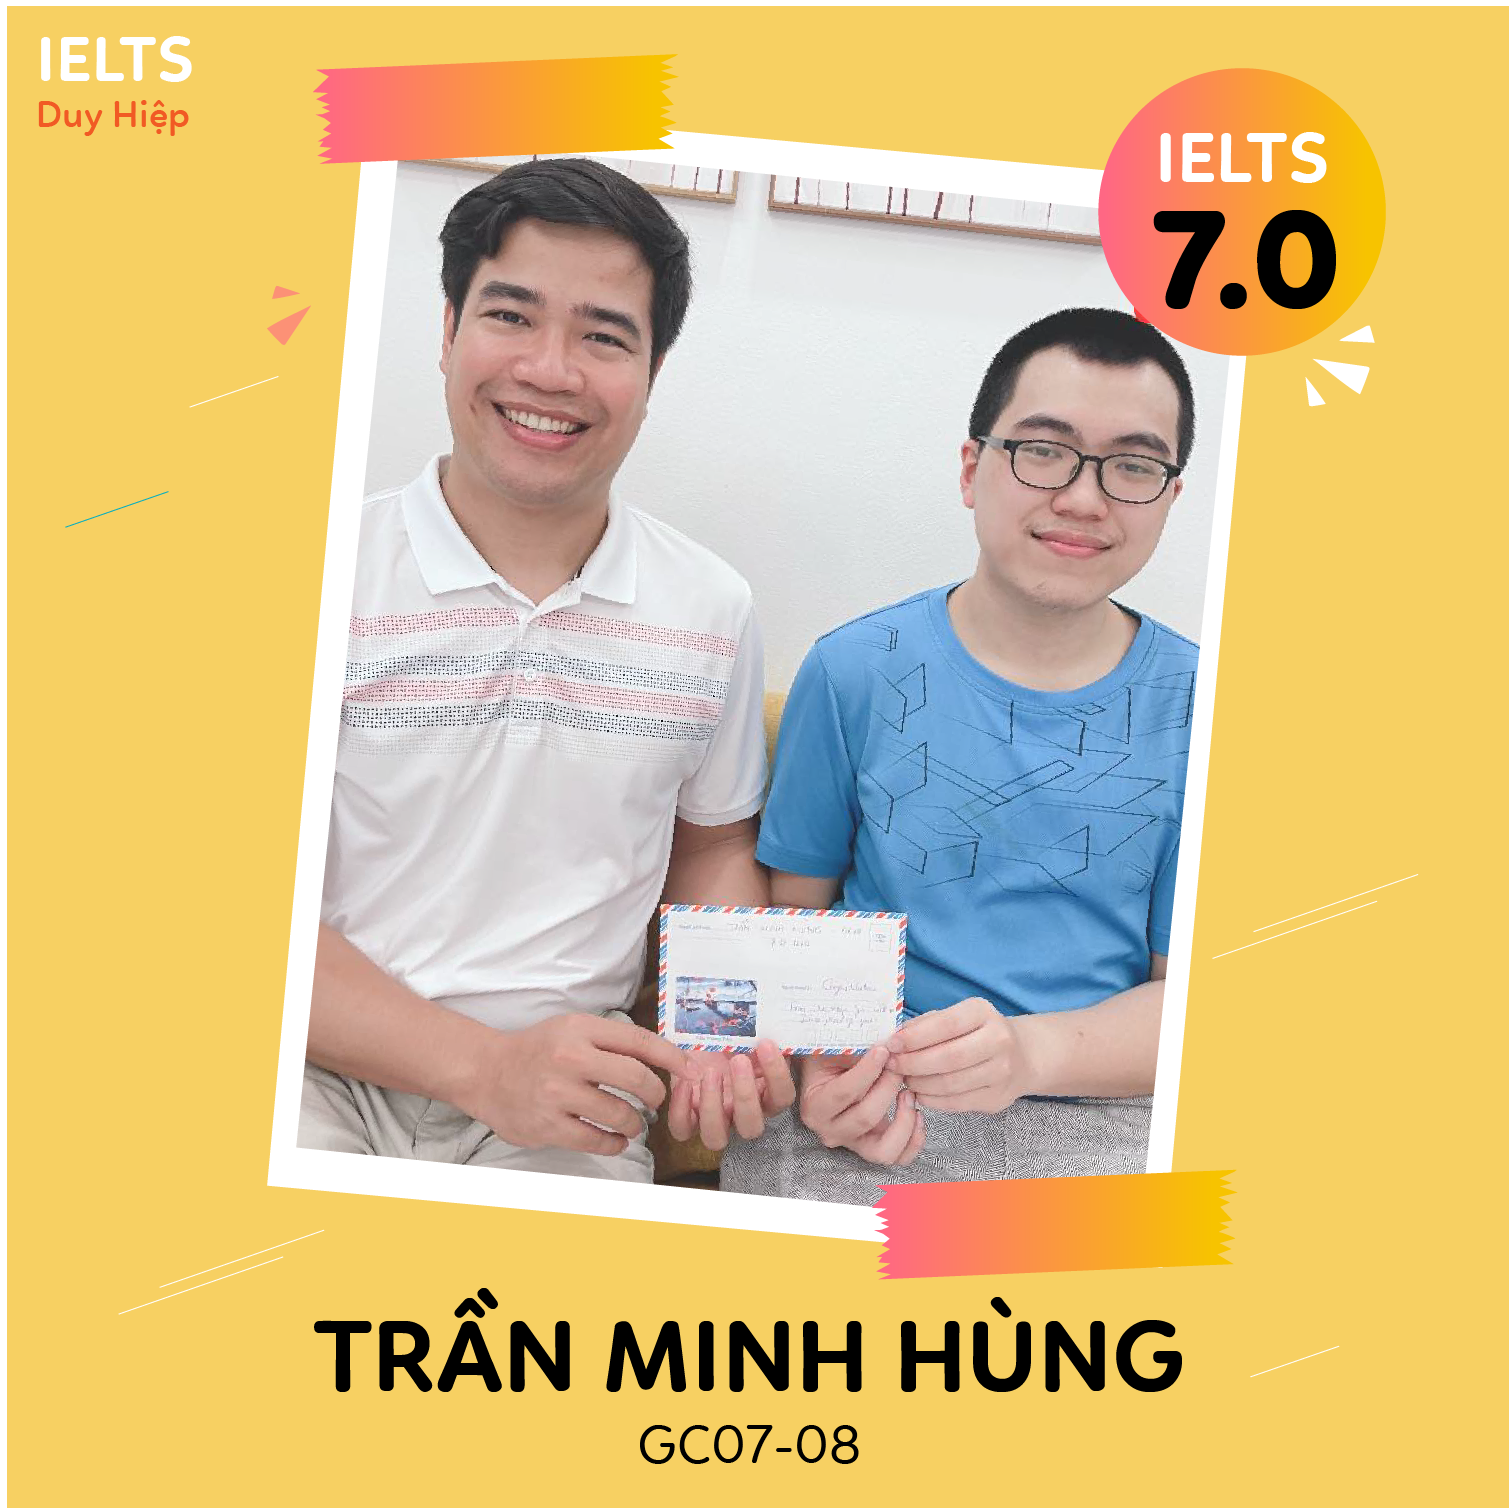 WALL OF FAME - Trần Minh Hùng 7.0 IELTS